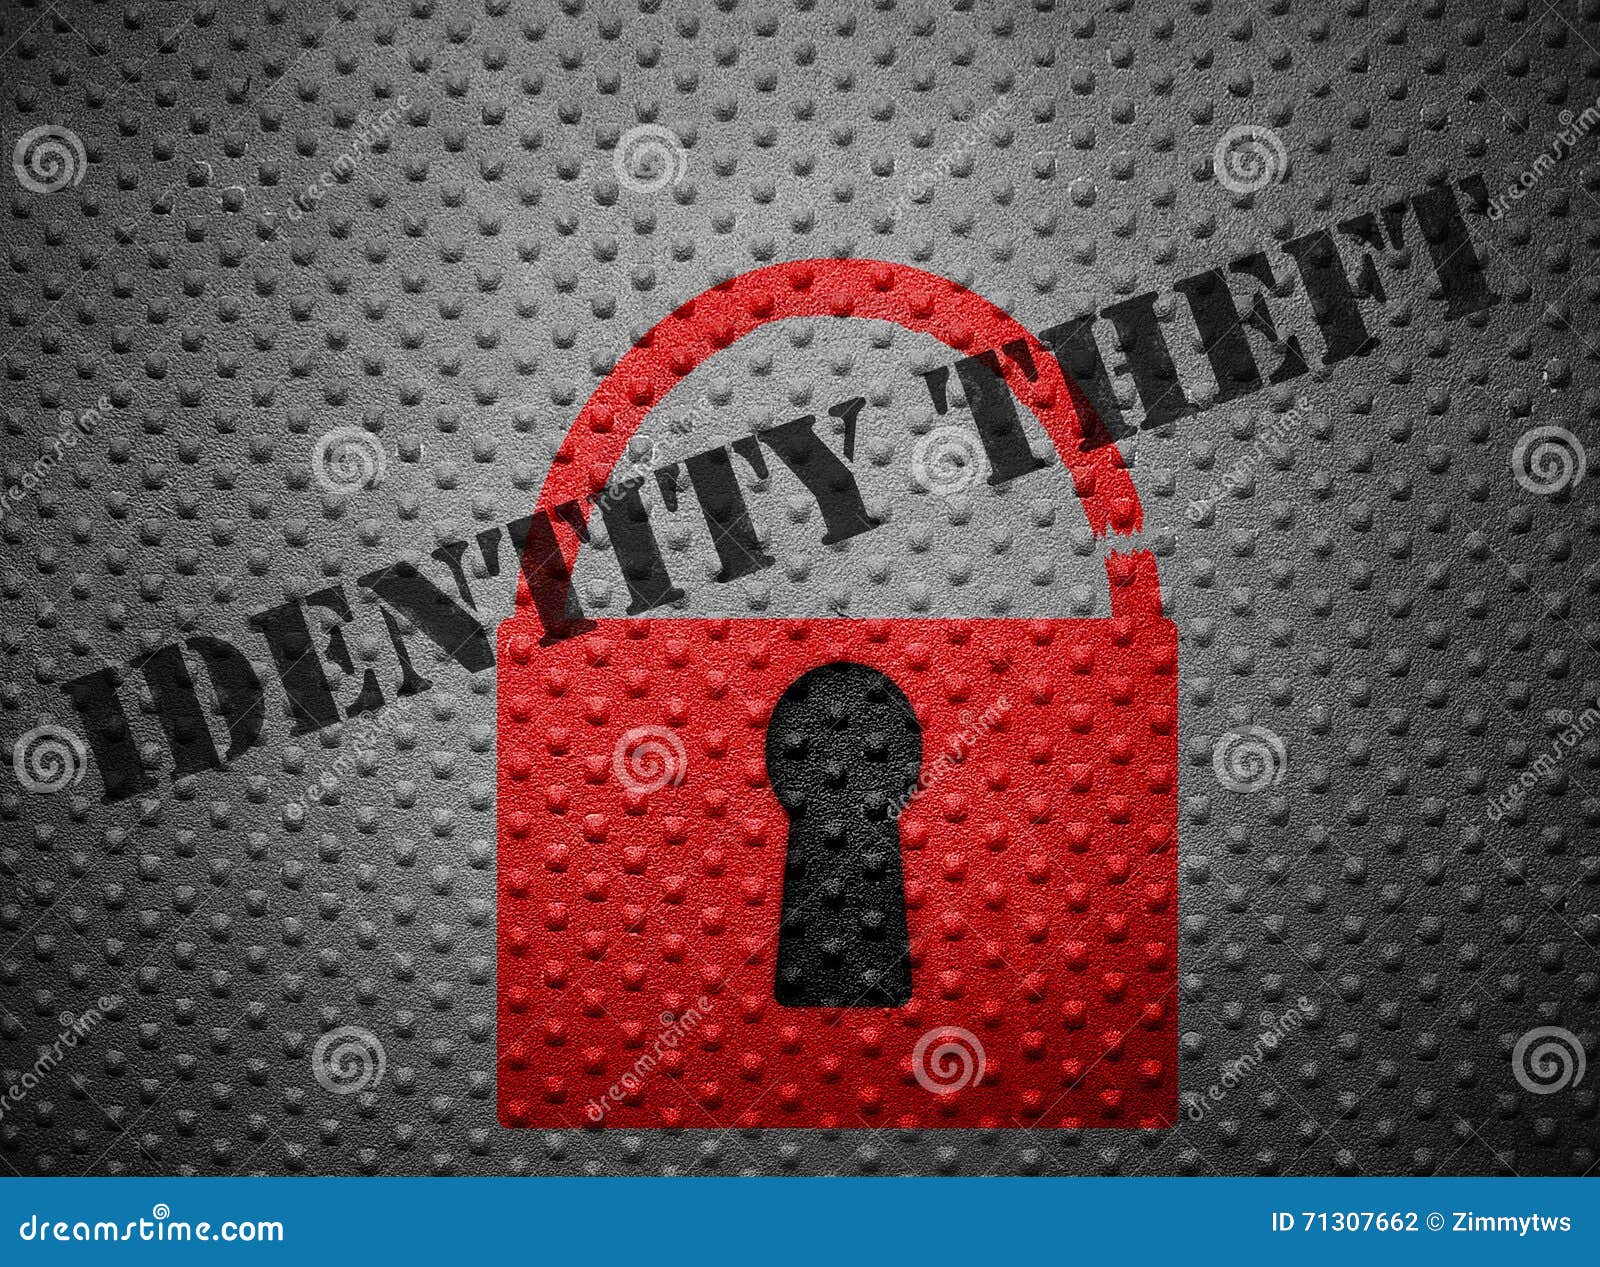 identity theft lock